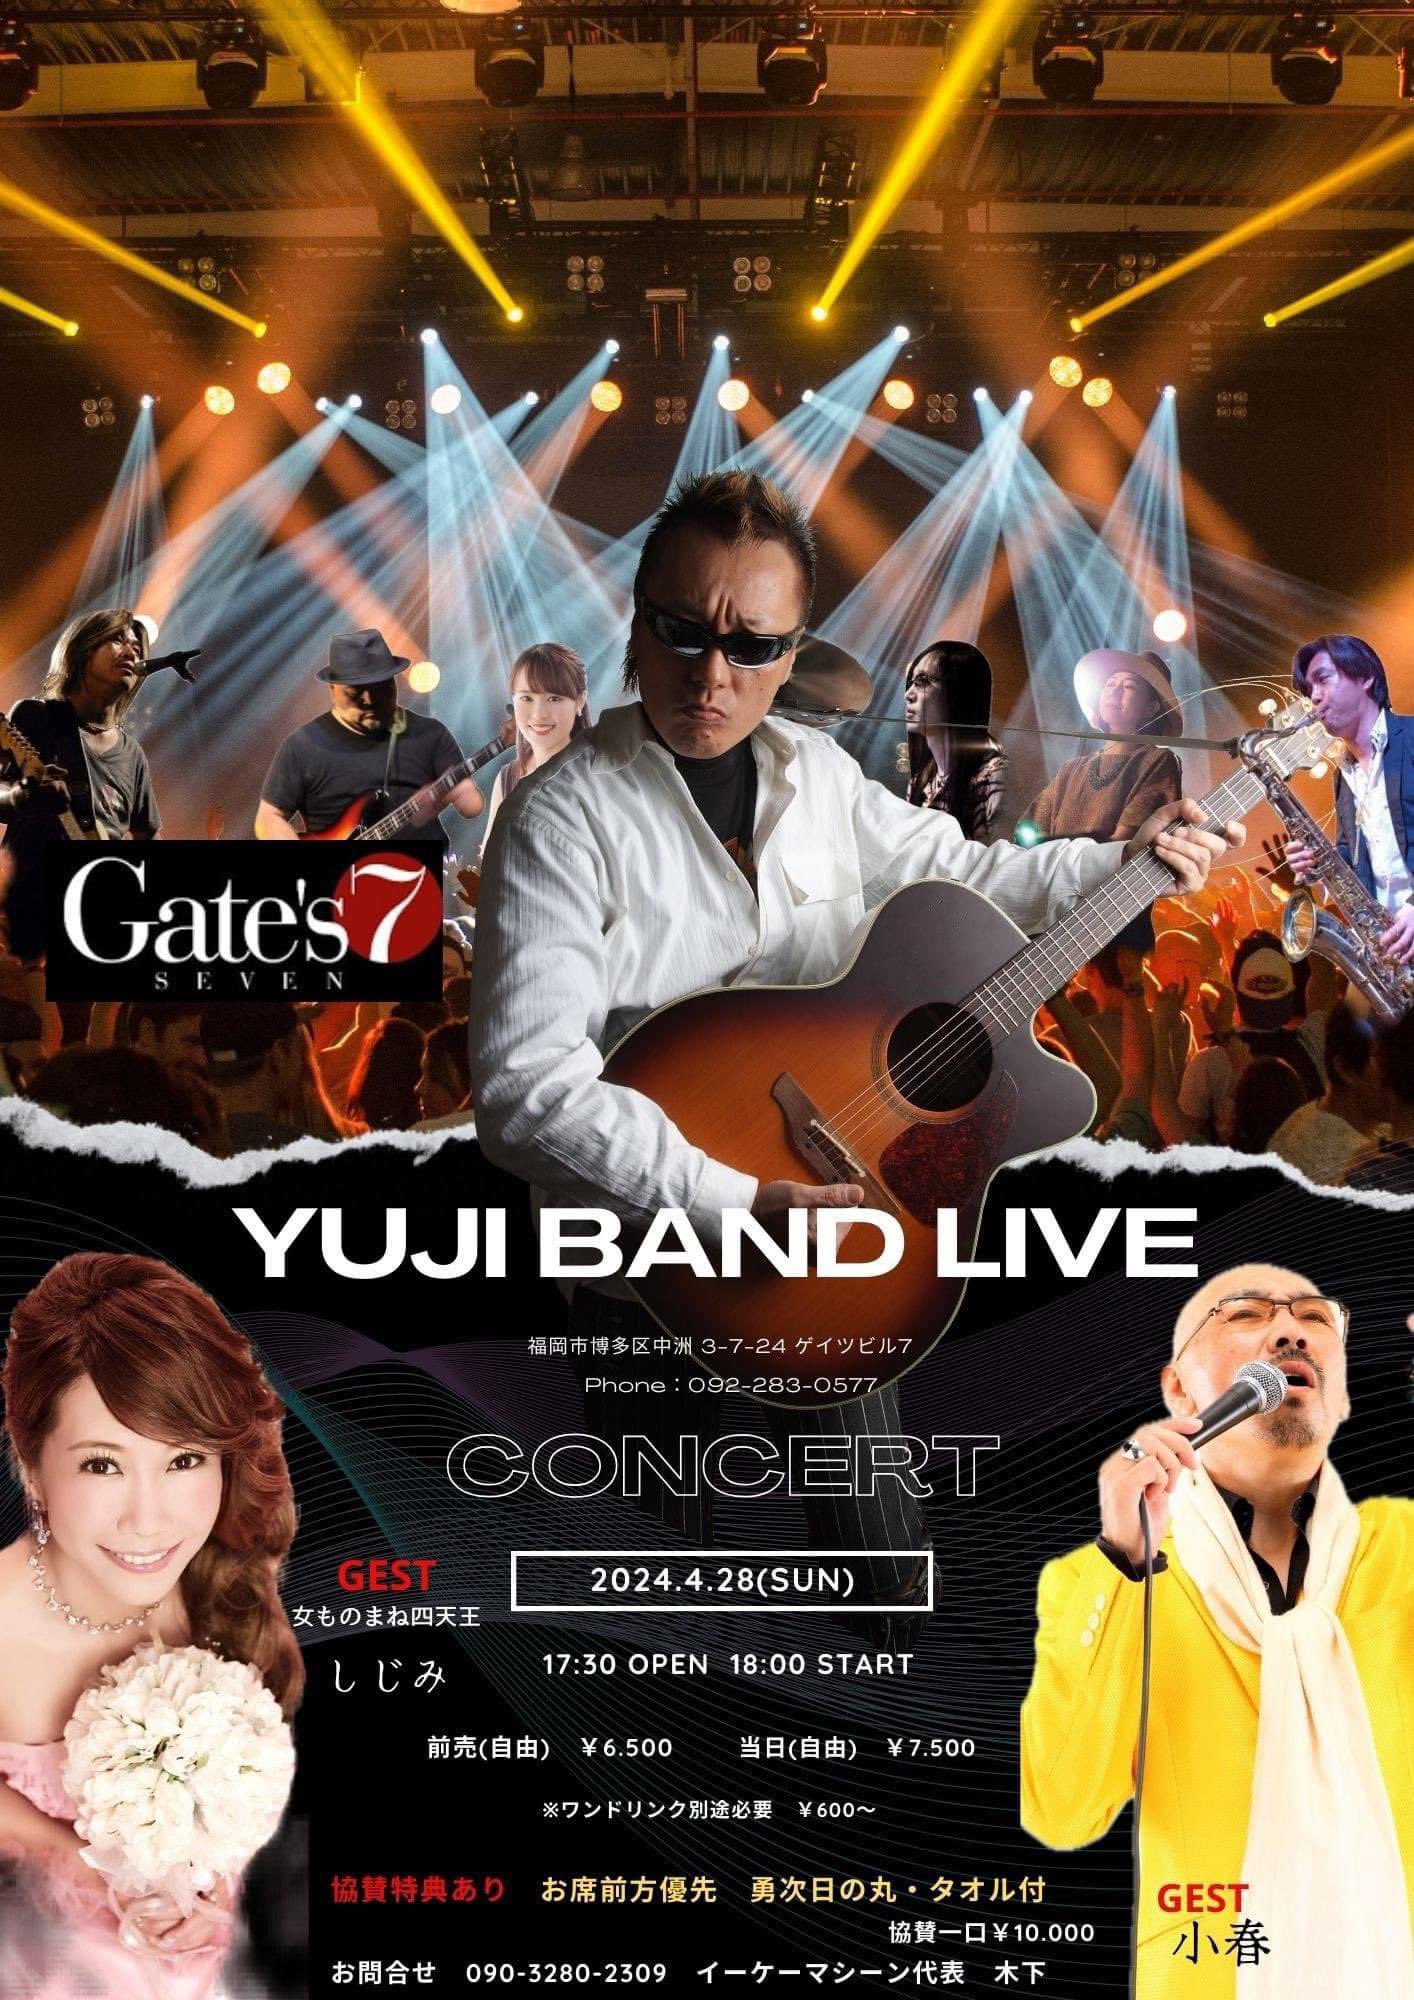 4/28「YUJI BAND LIVE」チケット完売🎫✨page-visual 4/28「YUJI BAND LIVE」チケット完売🎫✨ビジュアル